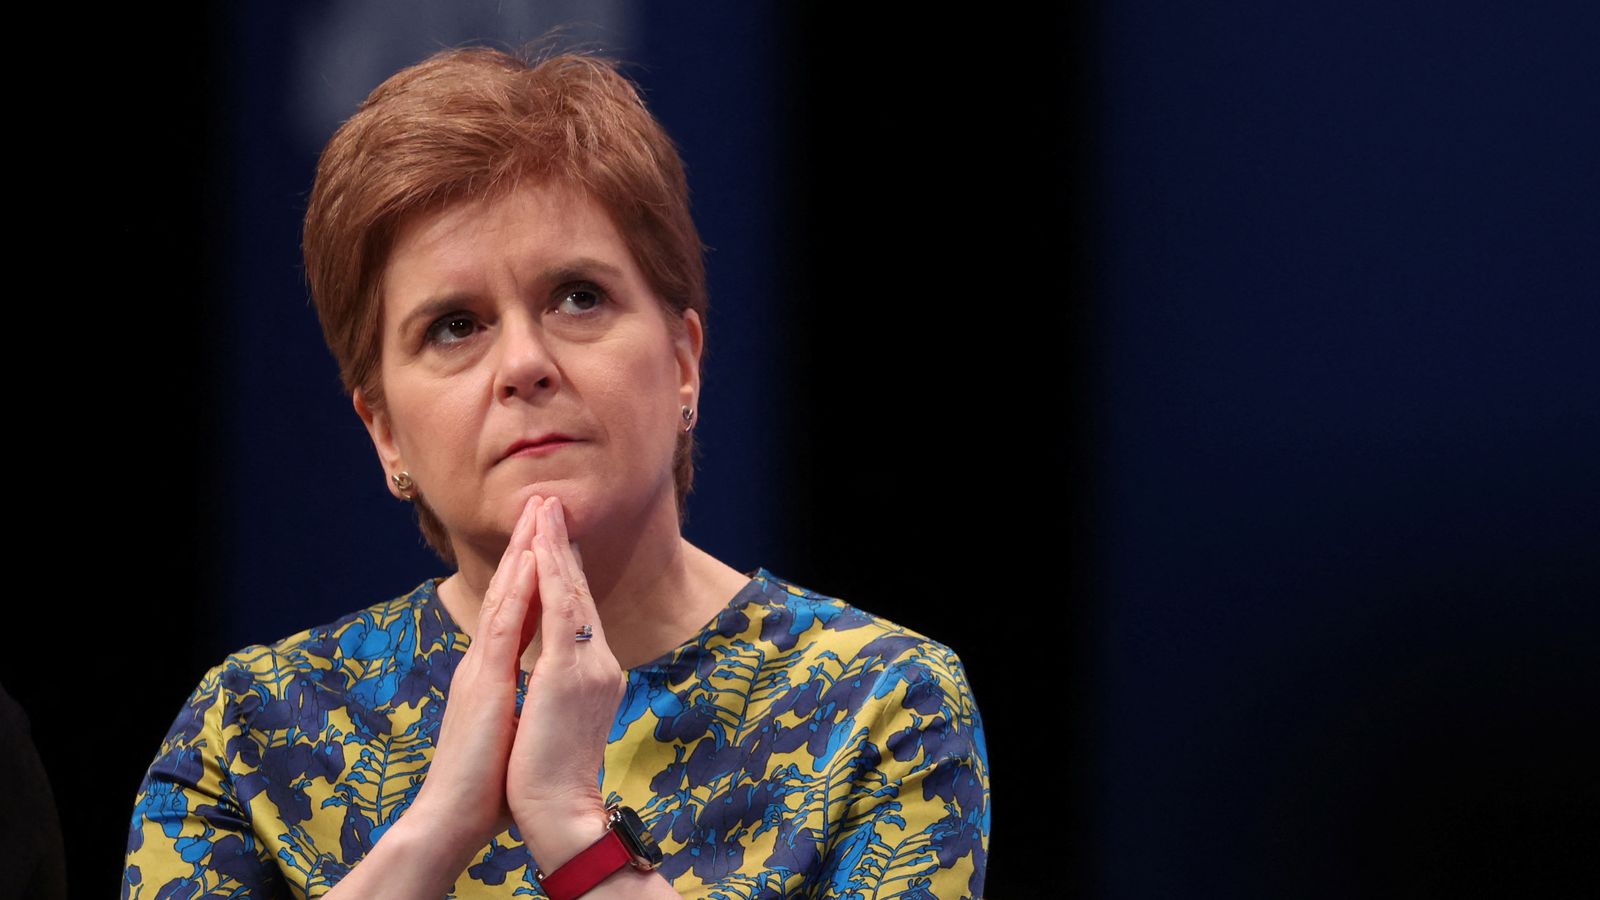 Scotland independence vote could be held next October, says Nicola Sturgeon